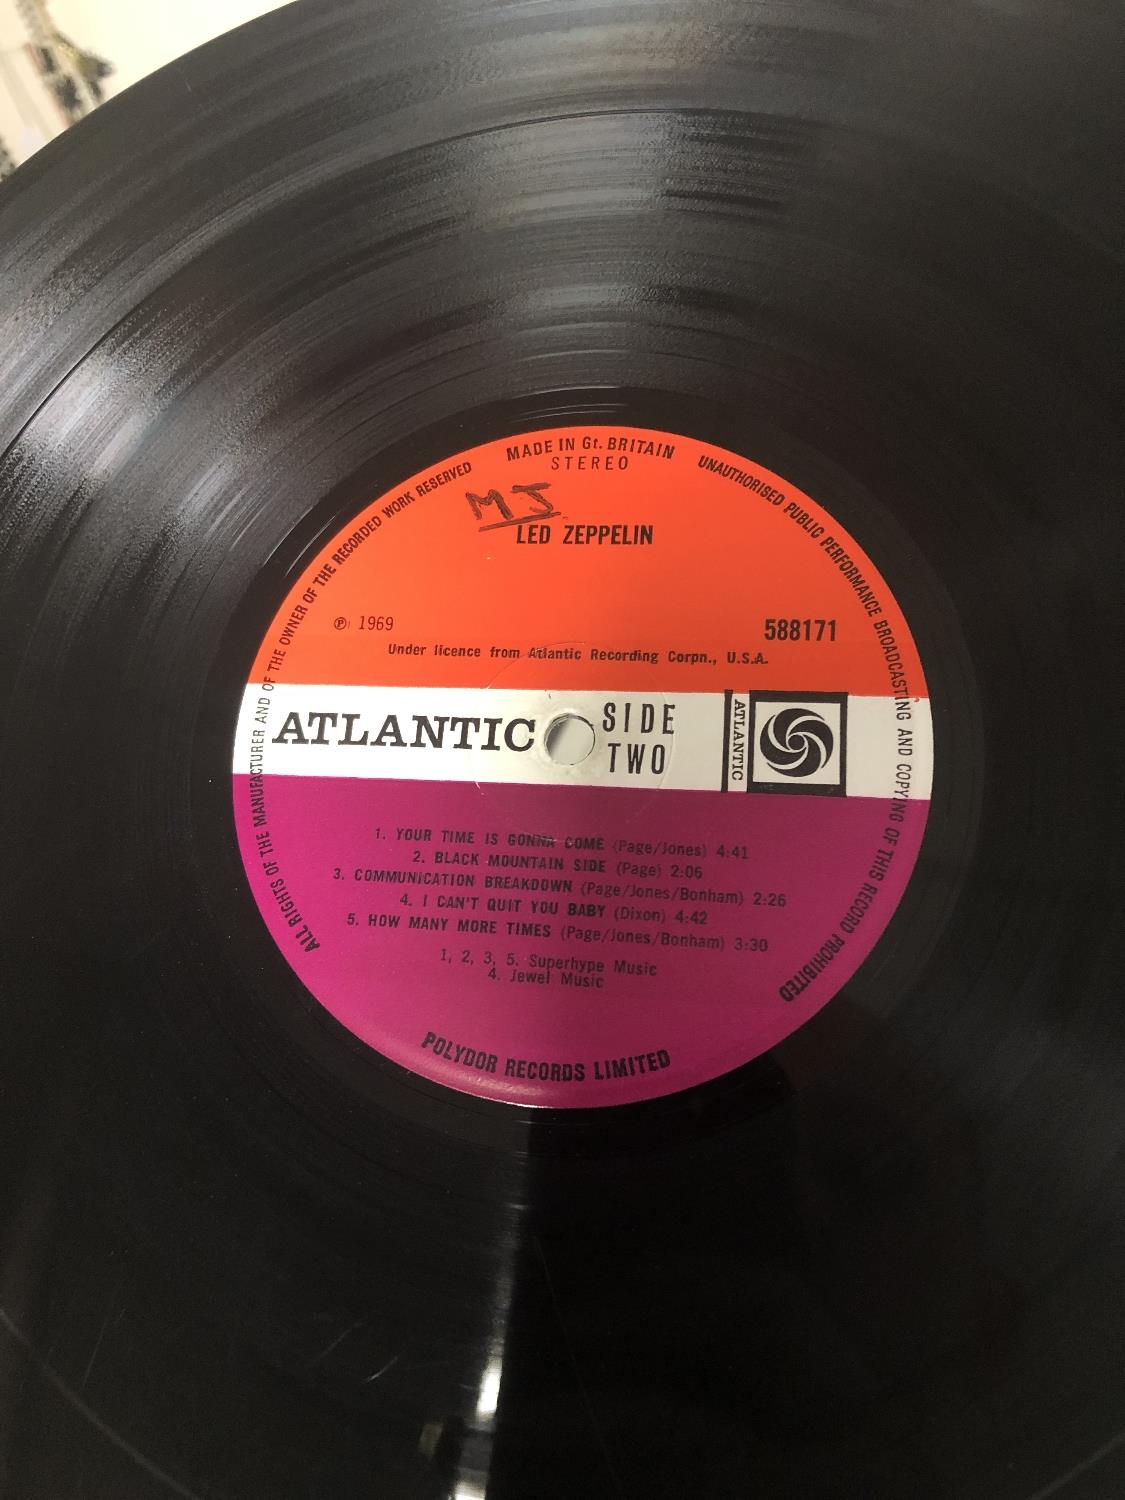 Led Zeppelin - Led Zeppelin, Atlantic Records 588 171, - Image 3 of 14